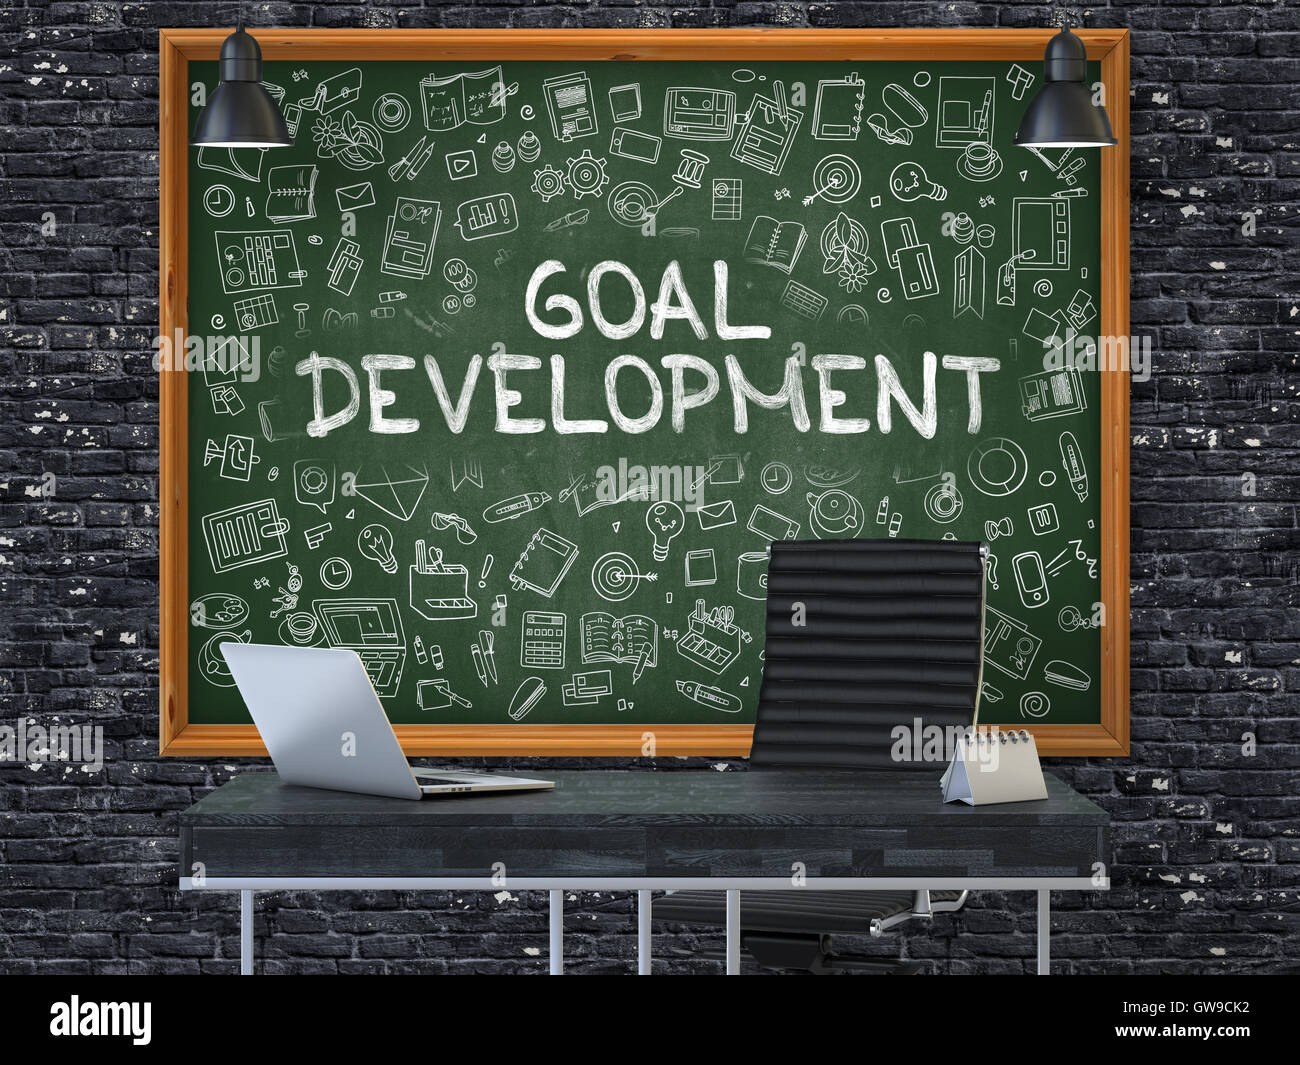 Goal Development Concept. Doodle Icons on Chalkboard. Stock Photo